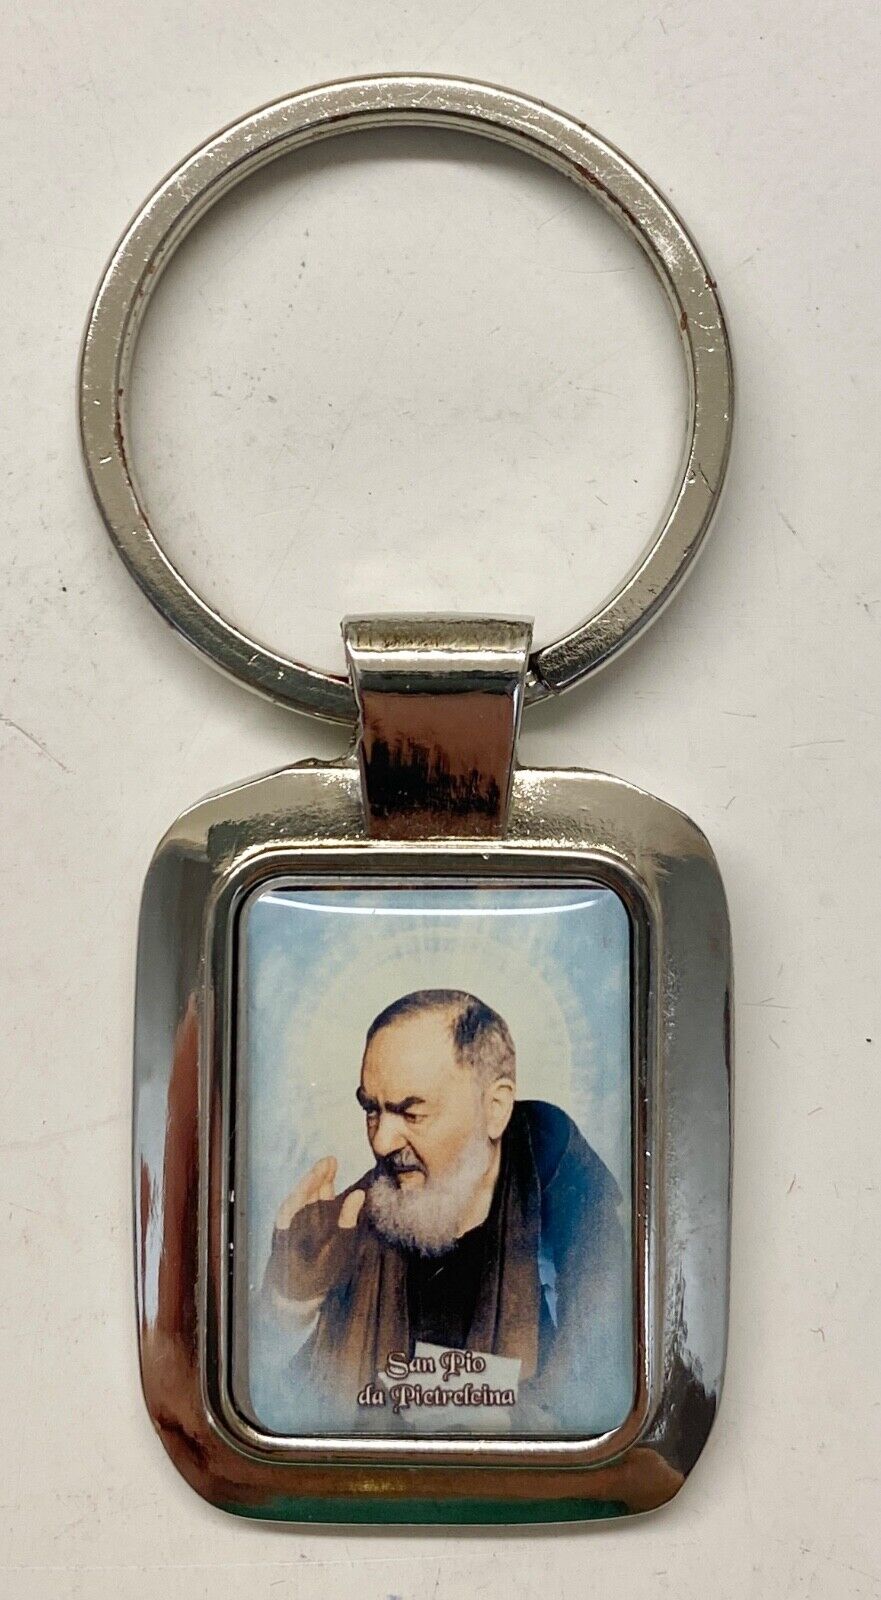 SAN PADRE PIO DA PIETRELCINA KEYRING new never used photo of Padre Pio EXCELLENT